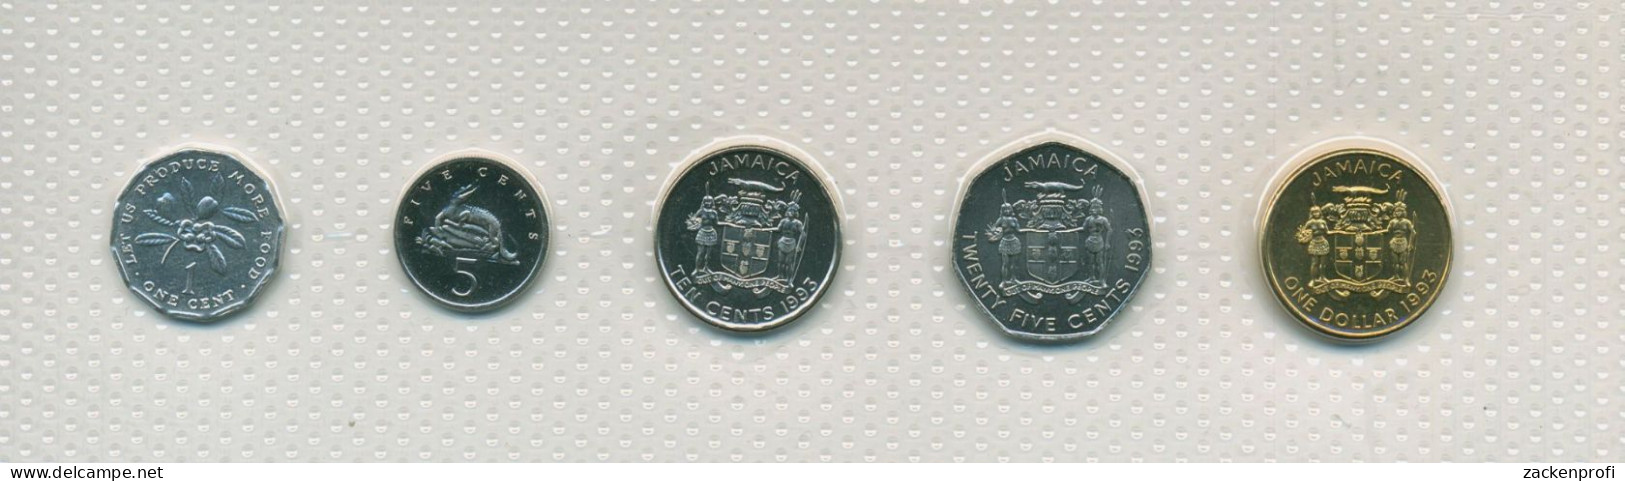 Jamaika 1991/1993 Kursmünzen 1 Cent - 1 Dollar Im Blister, St, (m5463) - Jamaique